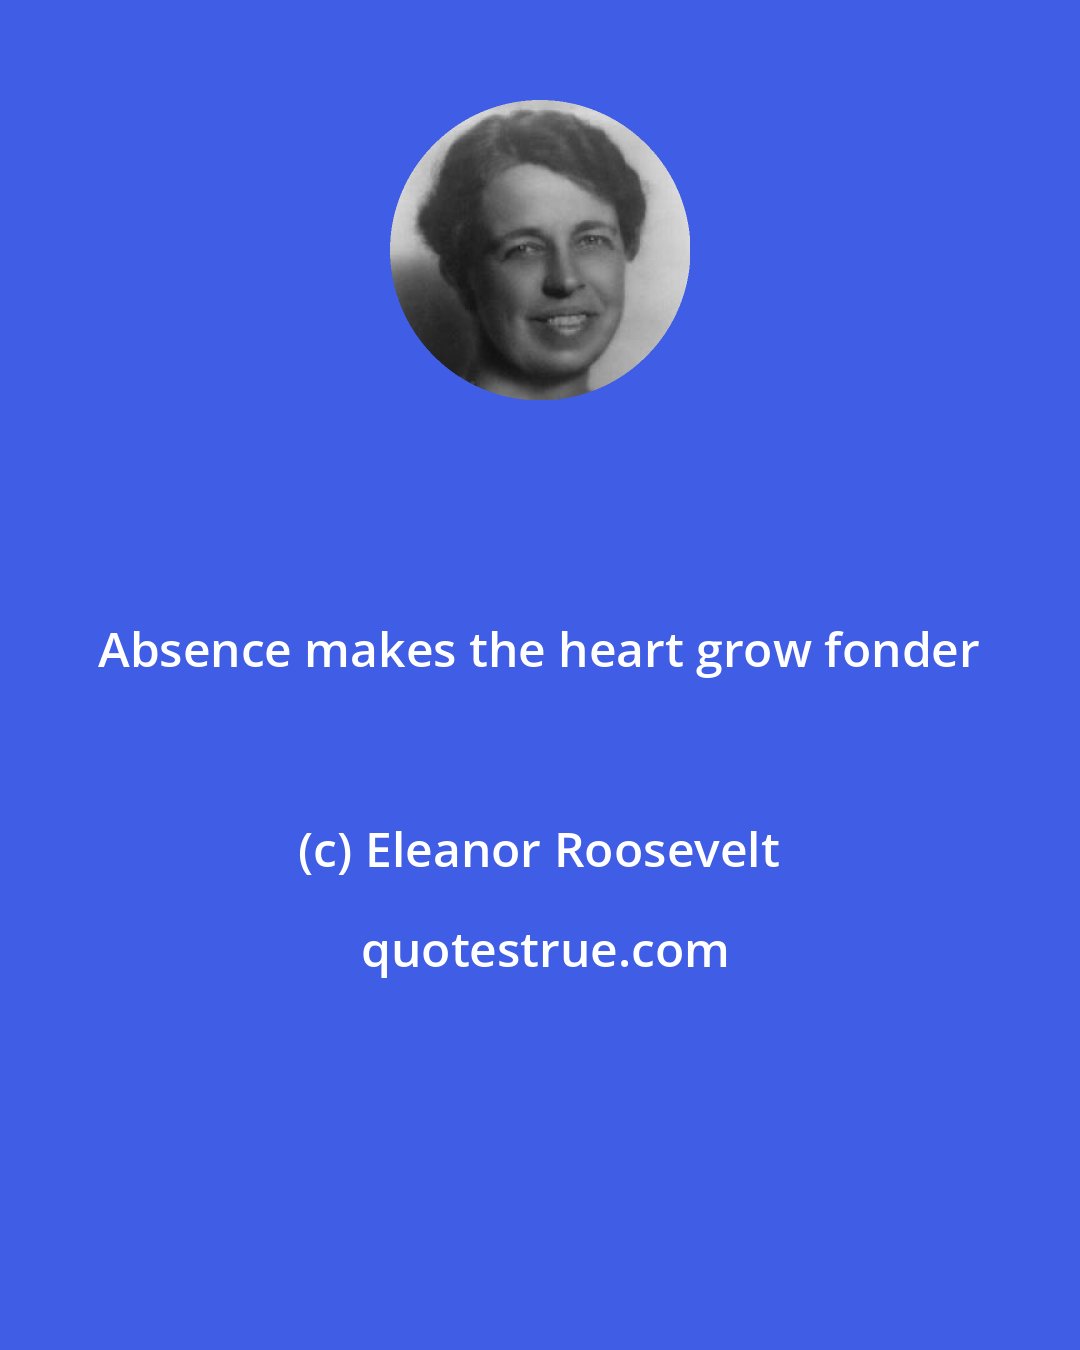 Eleanor Roosevelt: Absence makes the heart grow fonder